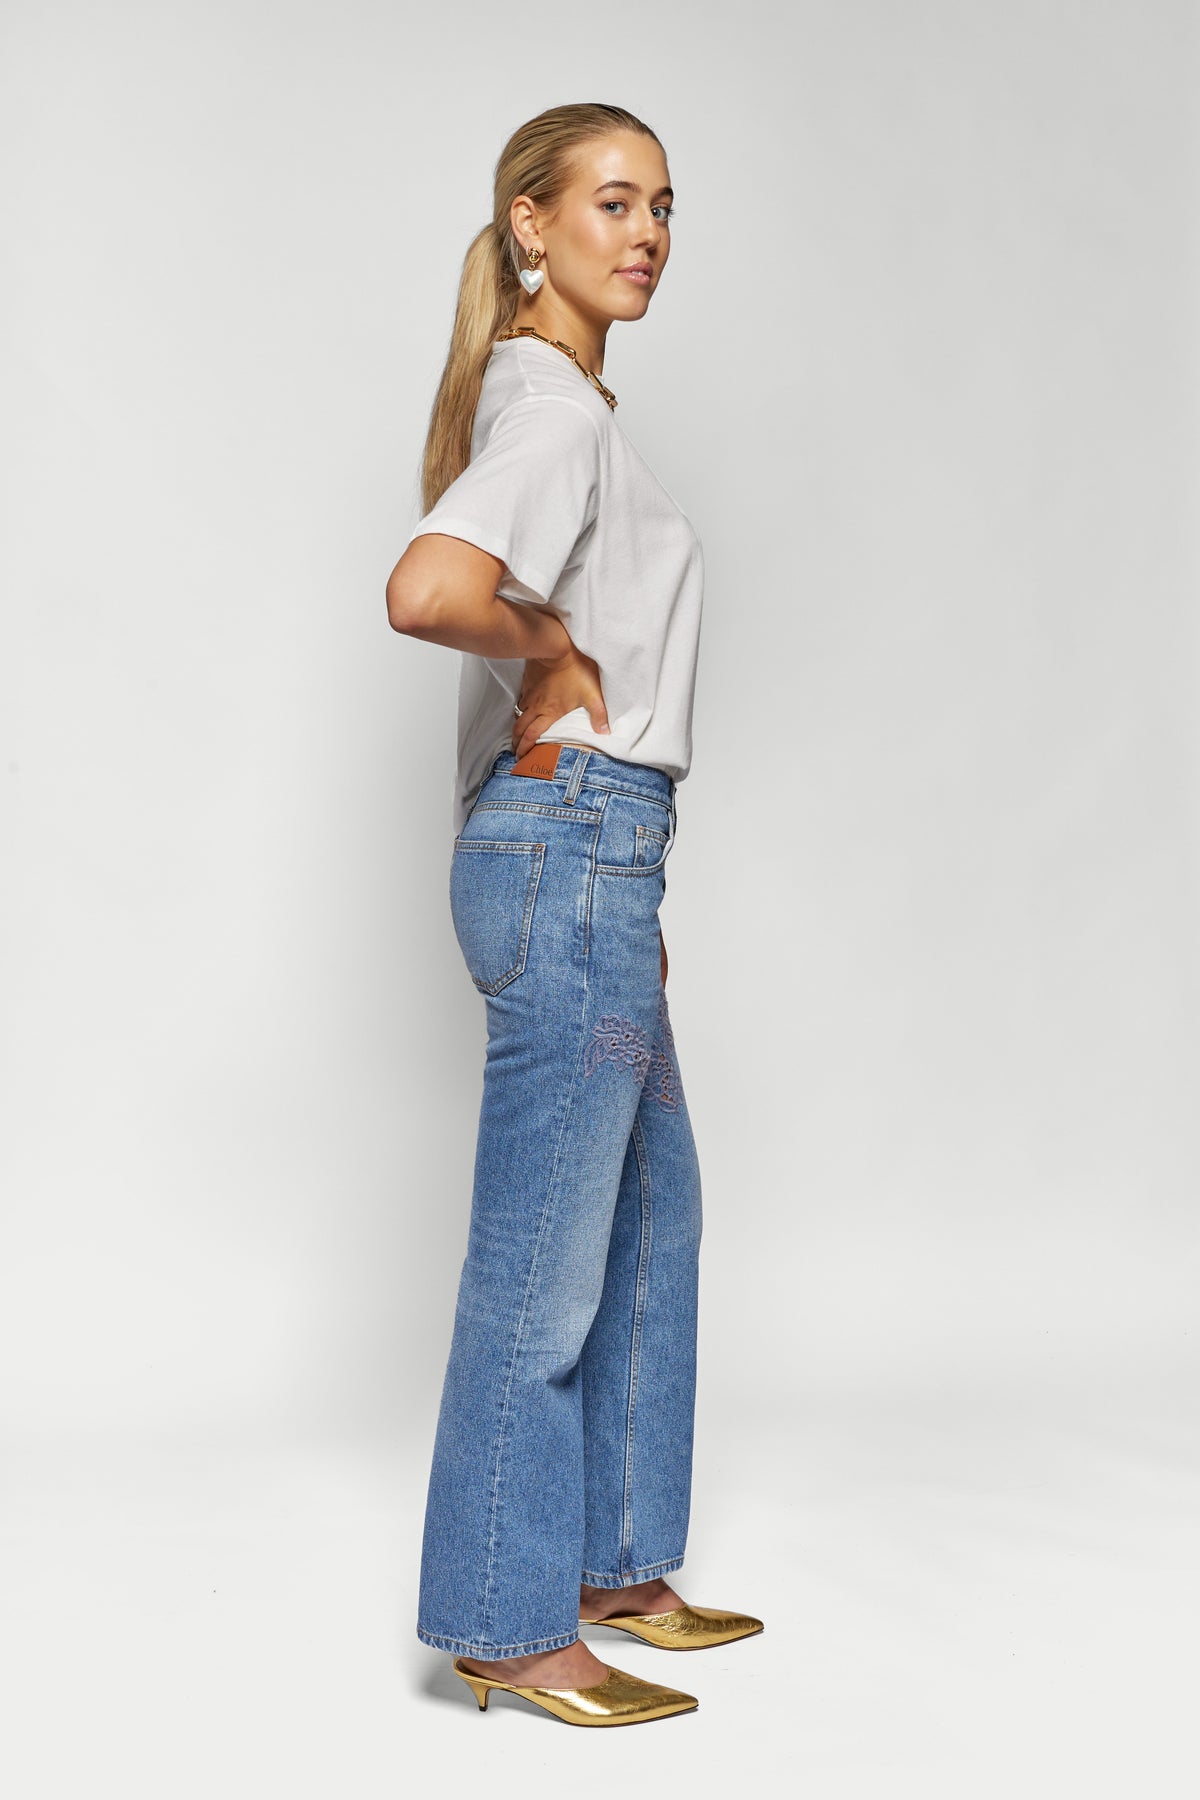 Chloé Denim Jeans